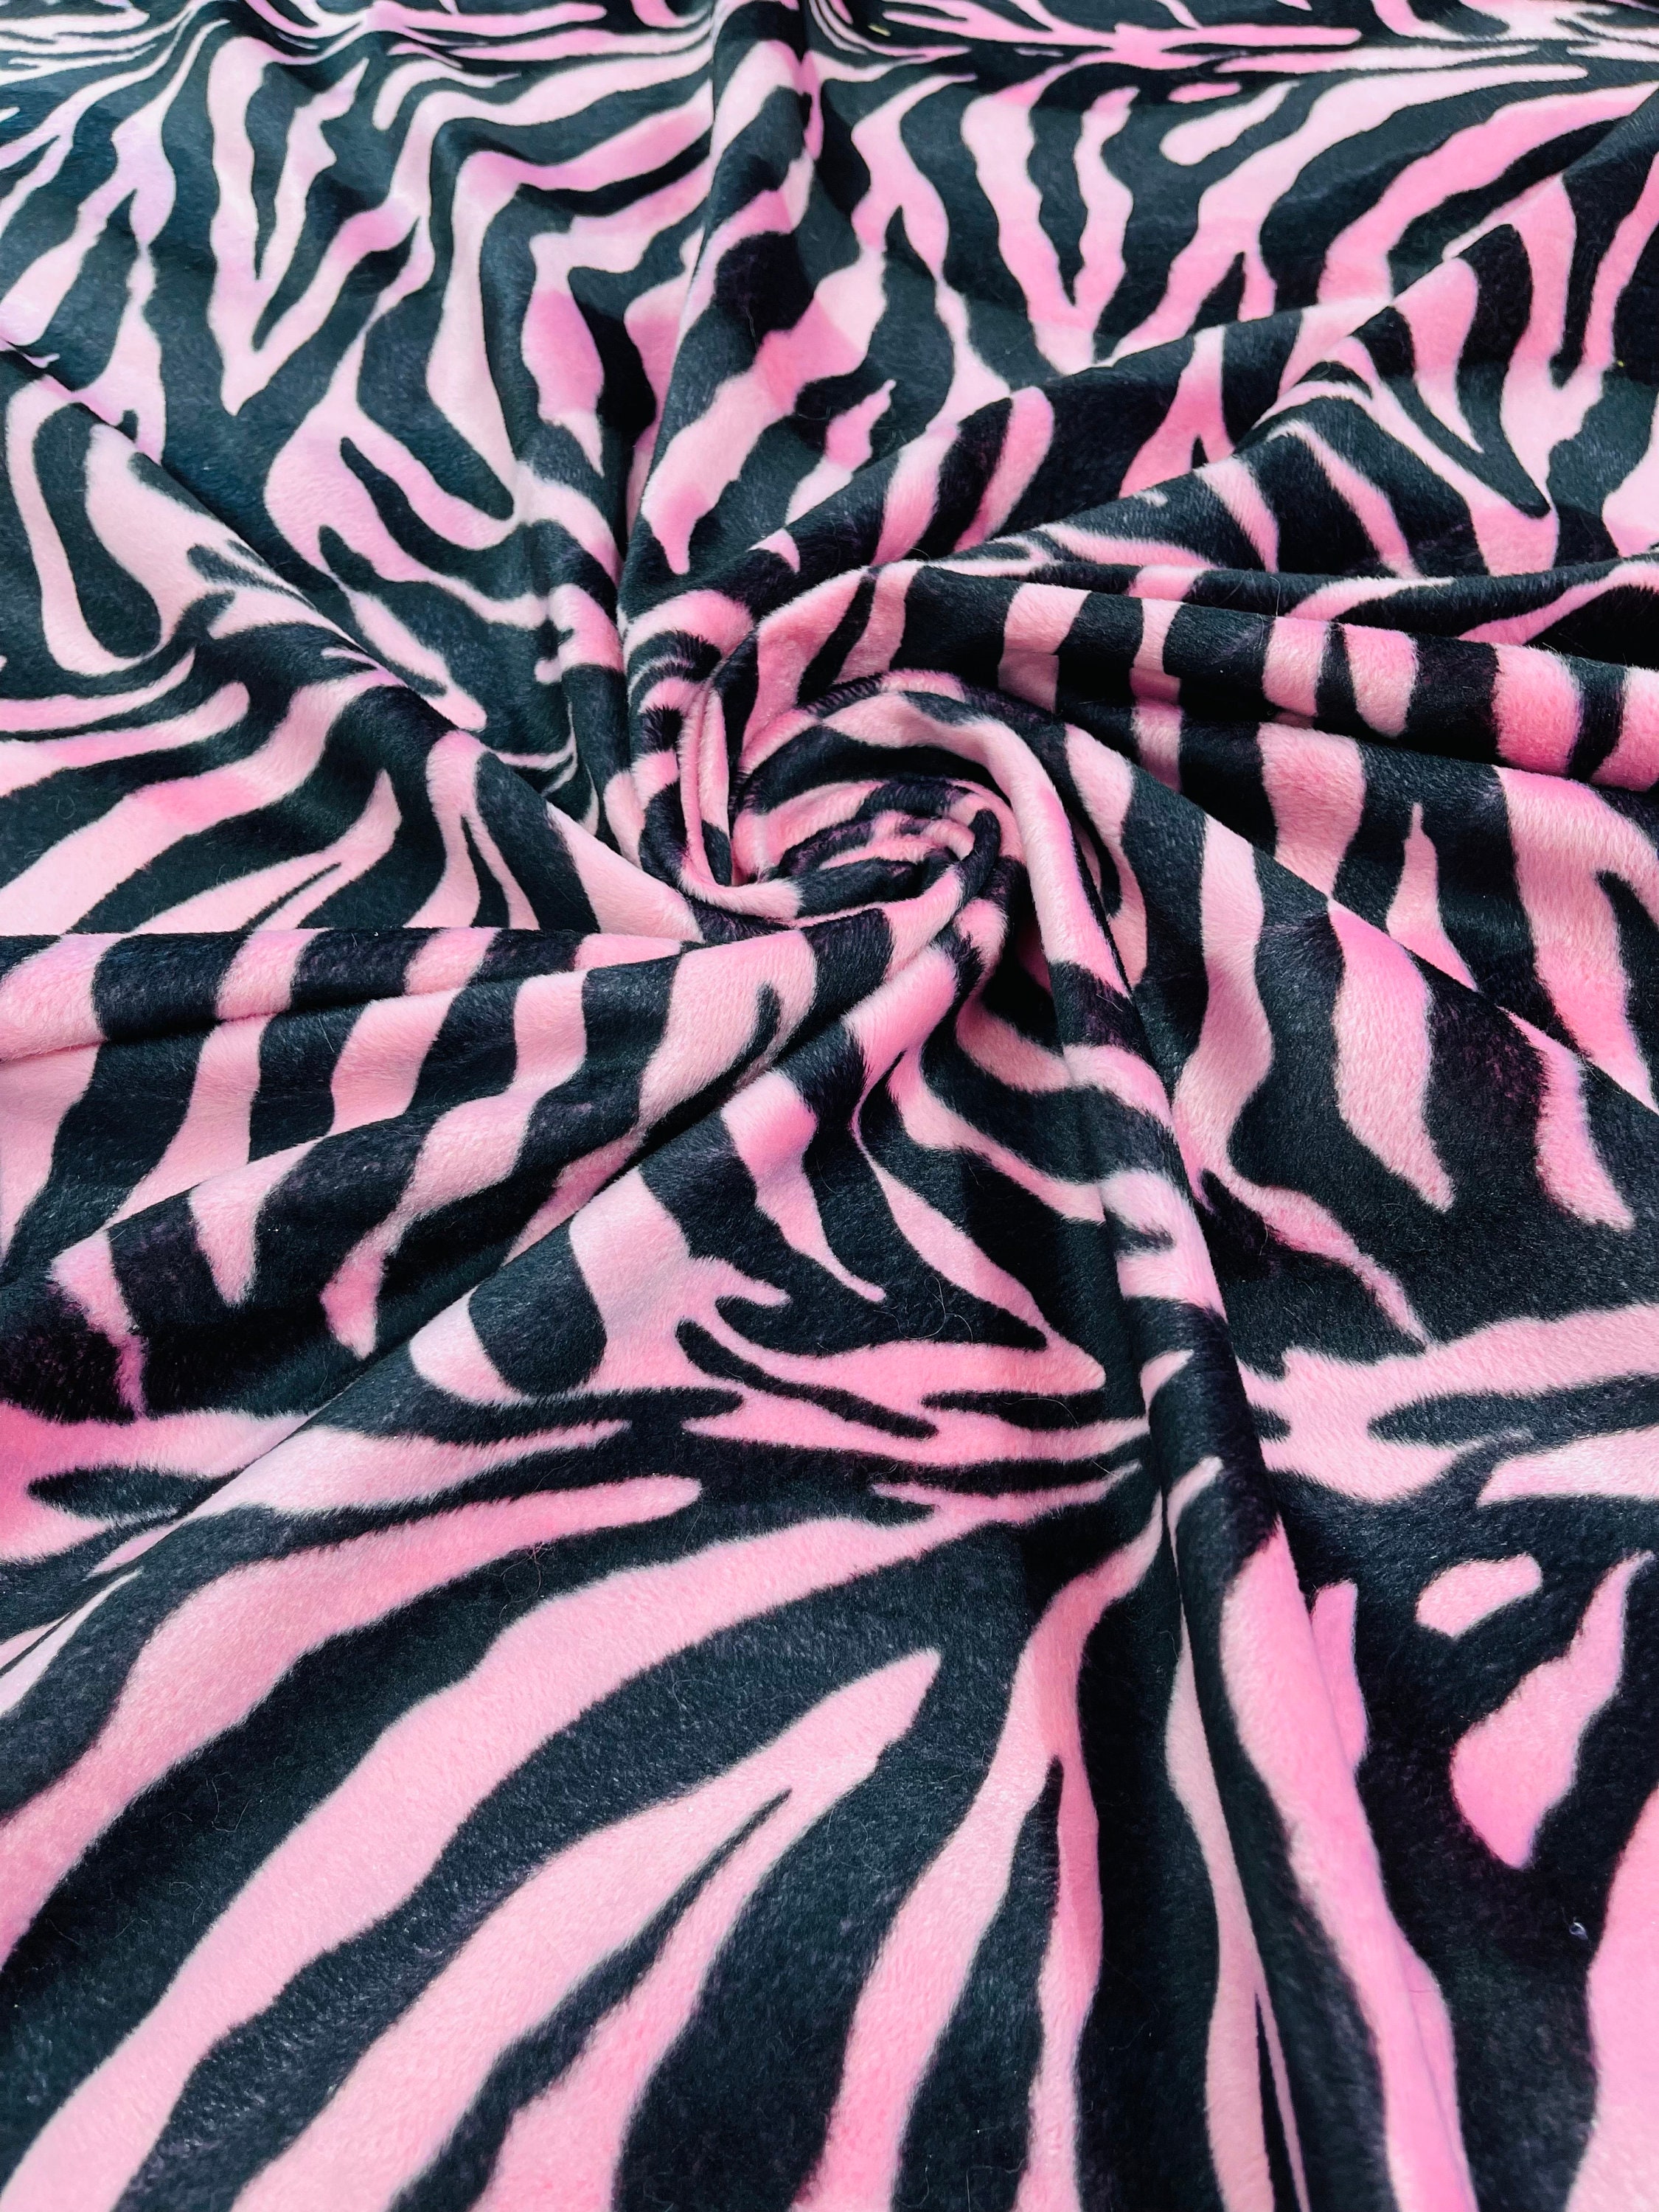 TY Beanie Boos ZOEY the Pink Zebra glitter Eyes regular Size 6 Inch 